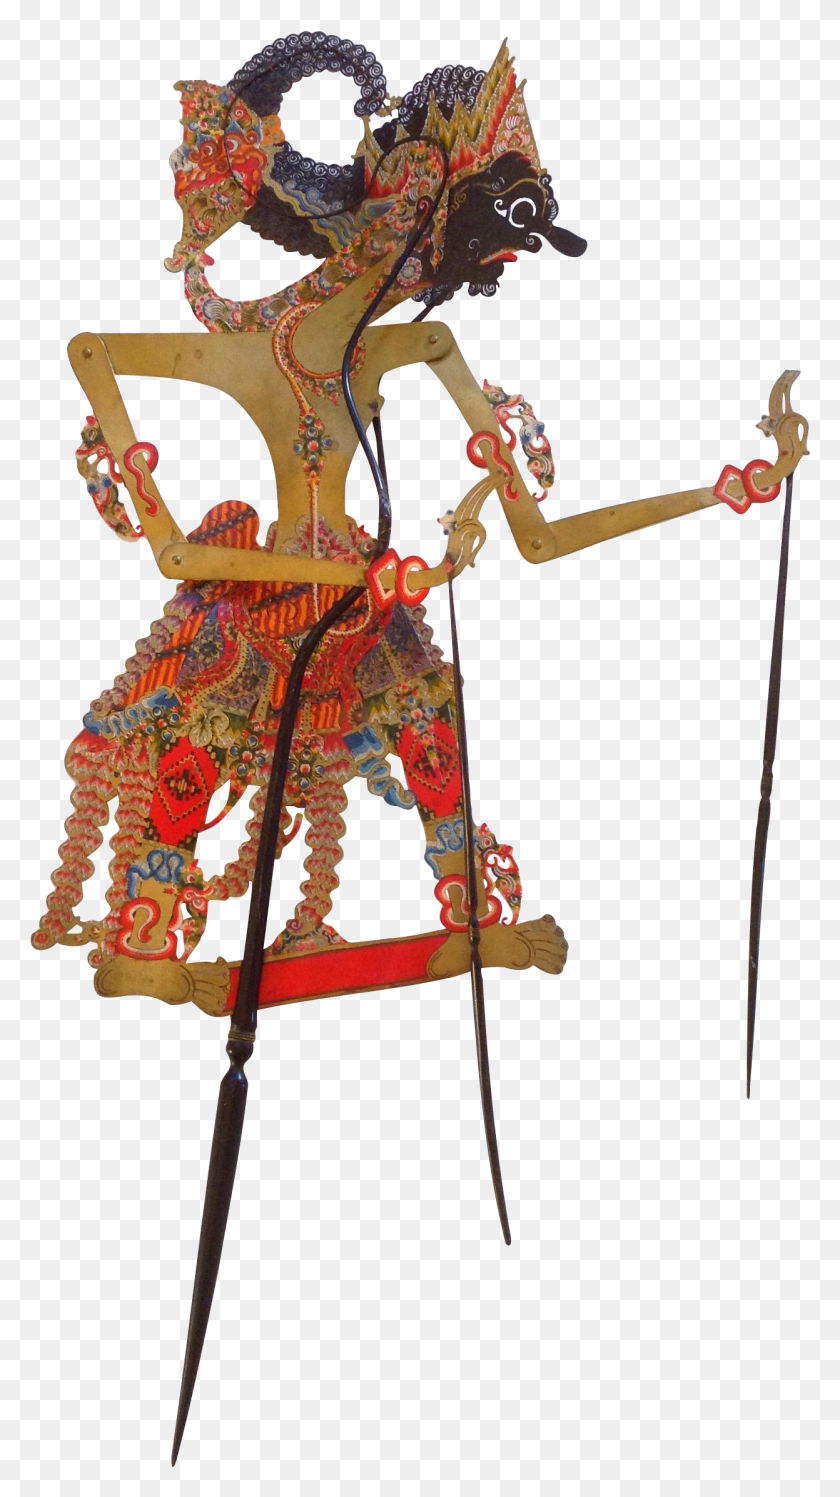 1247x2298 Marioneta De Sombra Indonesia Wayang Kulit Dursasana On Wayang Kulit Puppet, Acrobático, Actividades De Ocio Hd Png